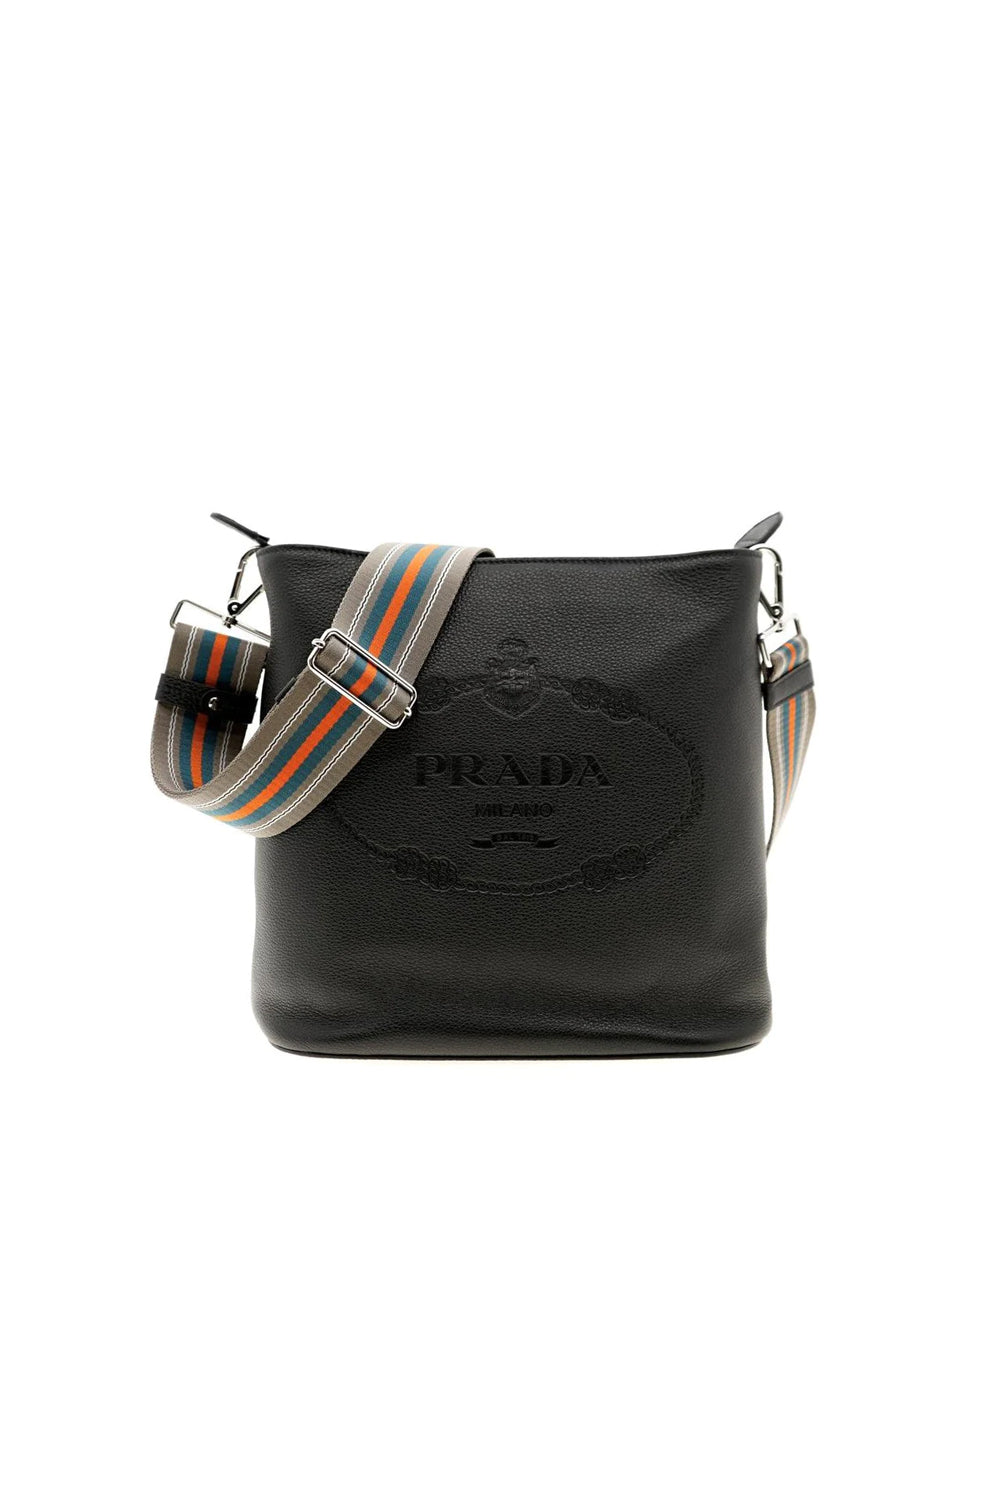 Prada Vitello Phenix Caramel Brown Leather Web Stripe Crossbody Bag